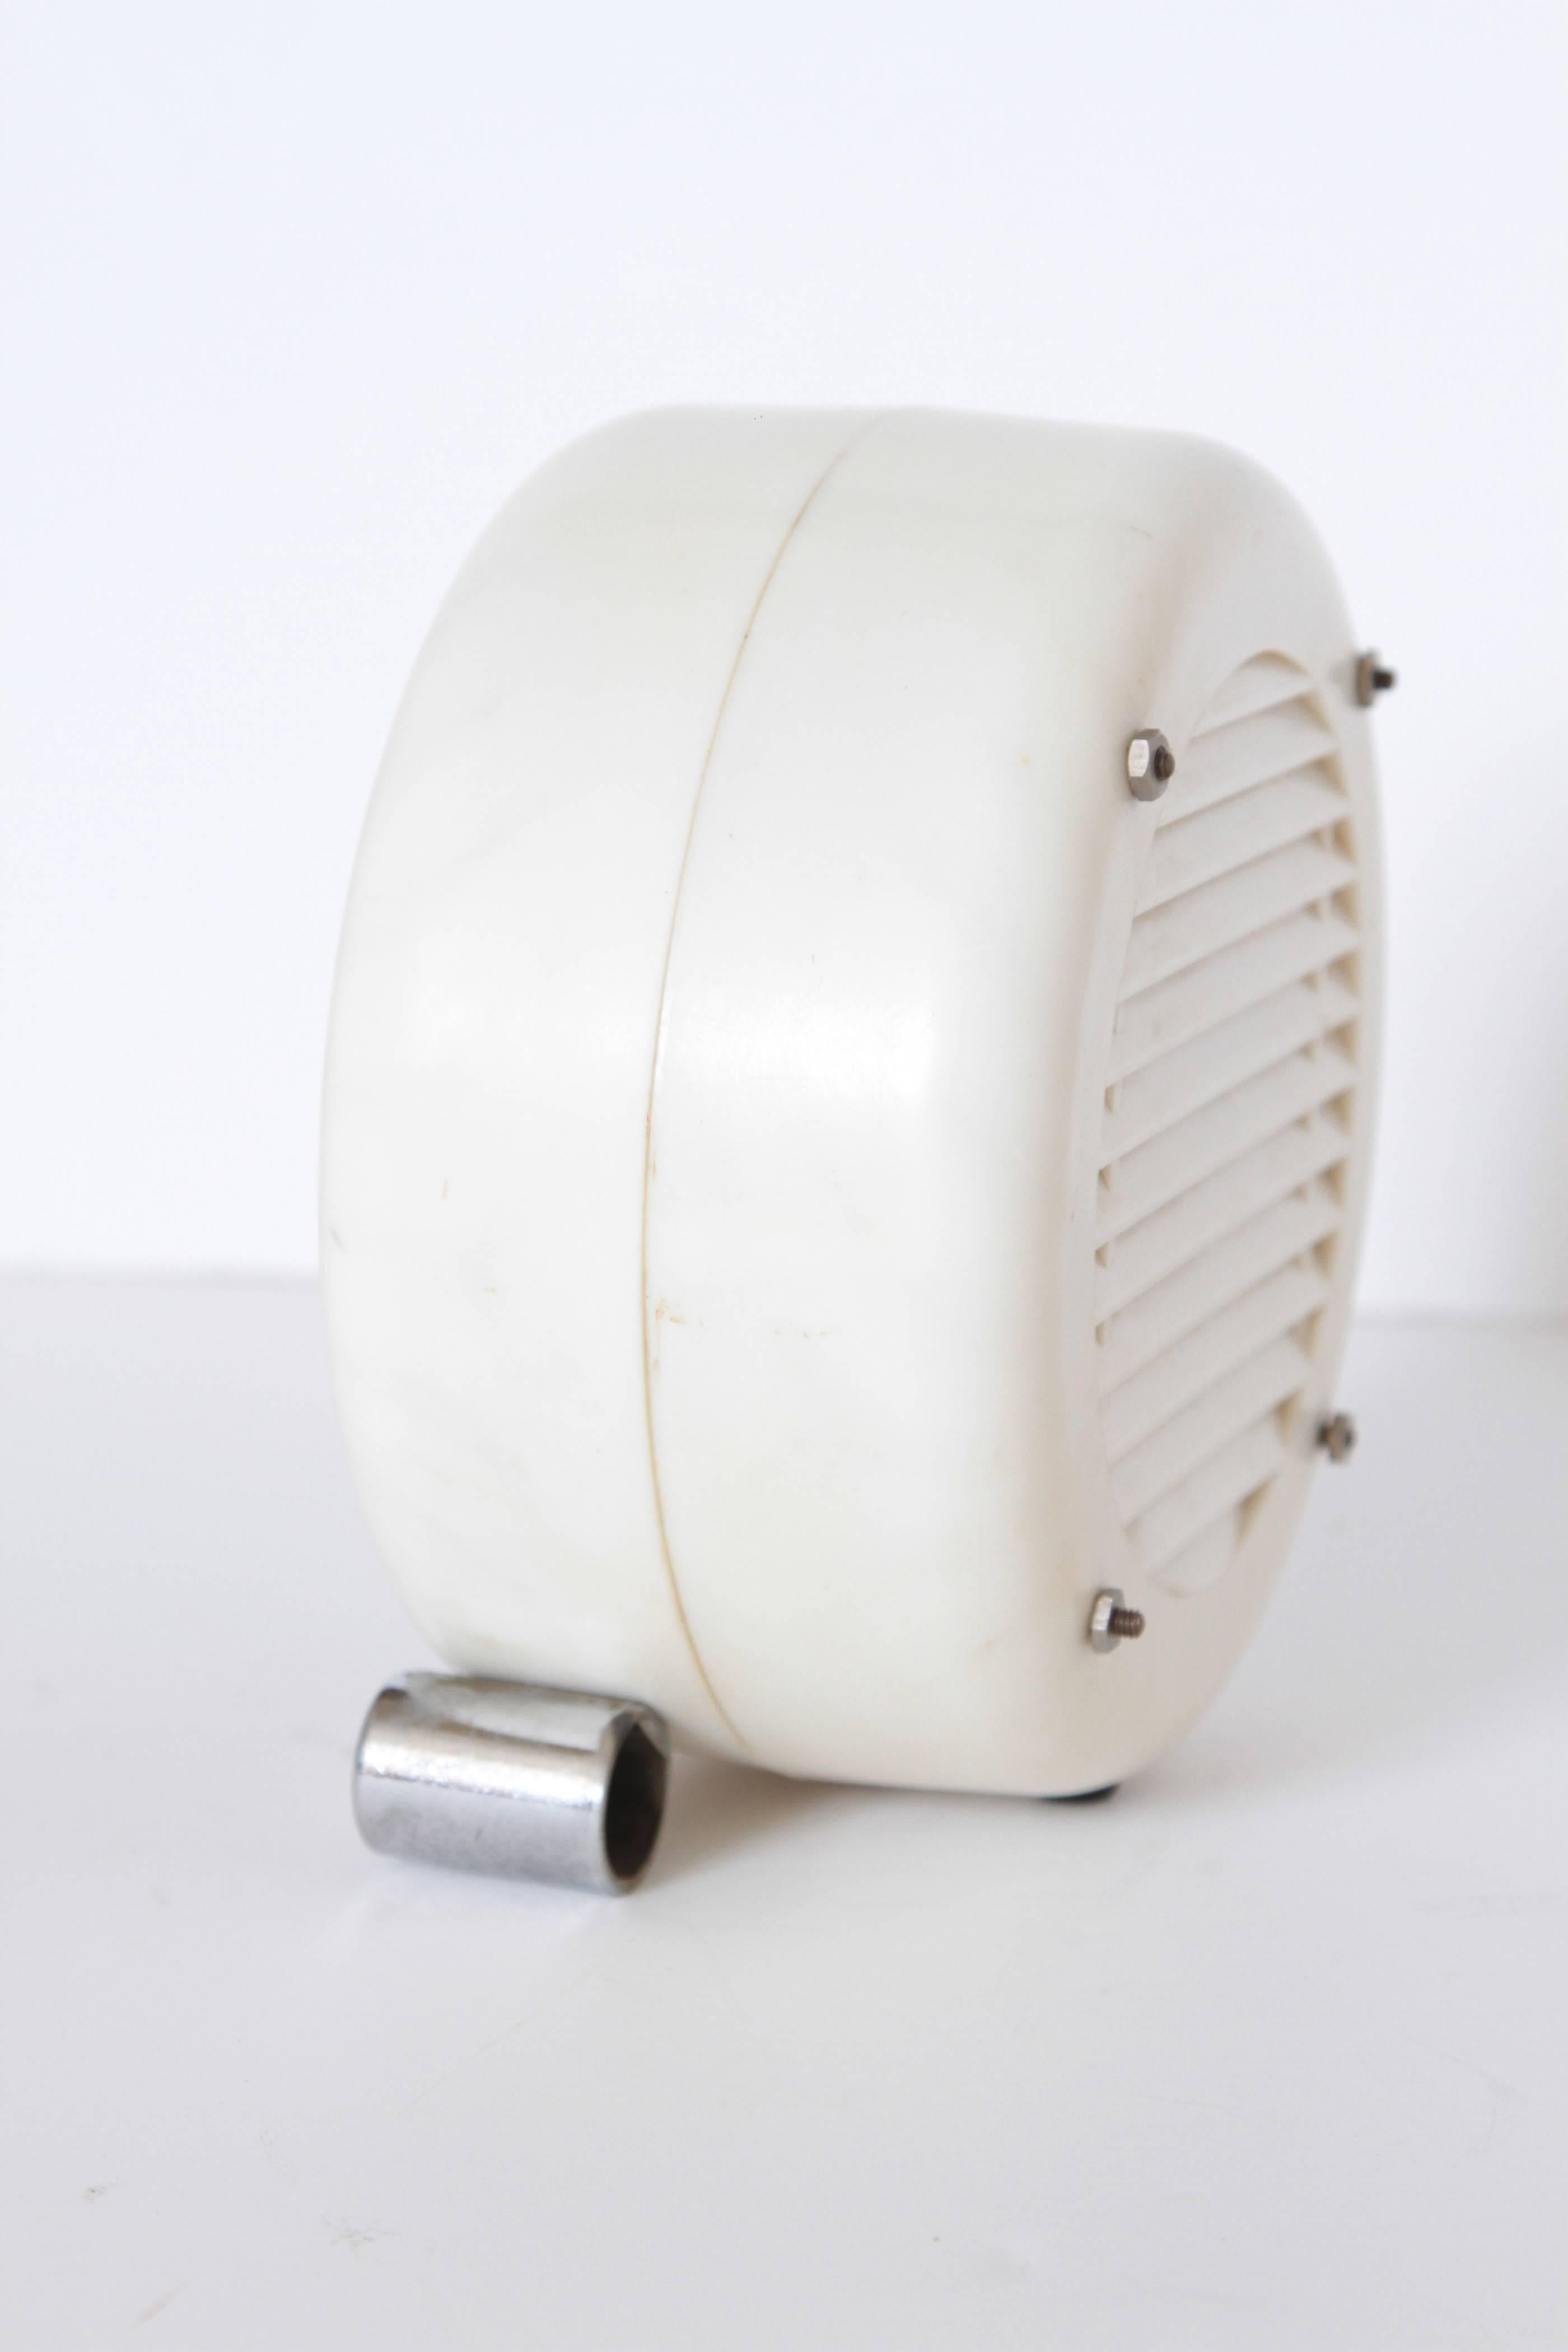 Australian Machine Age Midcentury Streamline Bakelite / Phenolic / Urea Extension Speaker For Sale